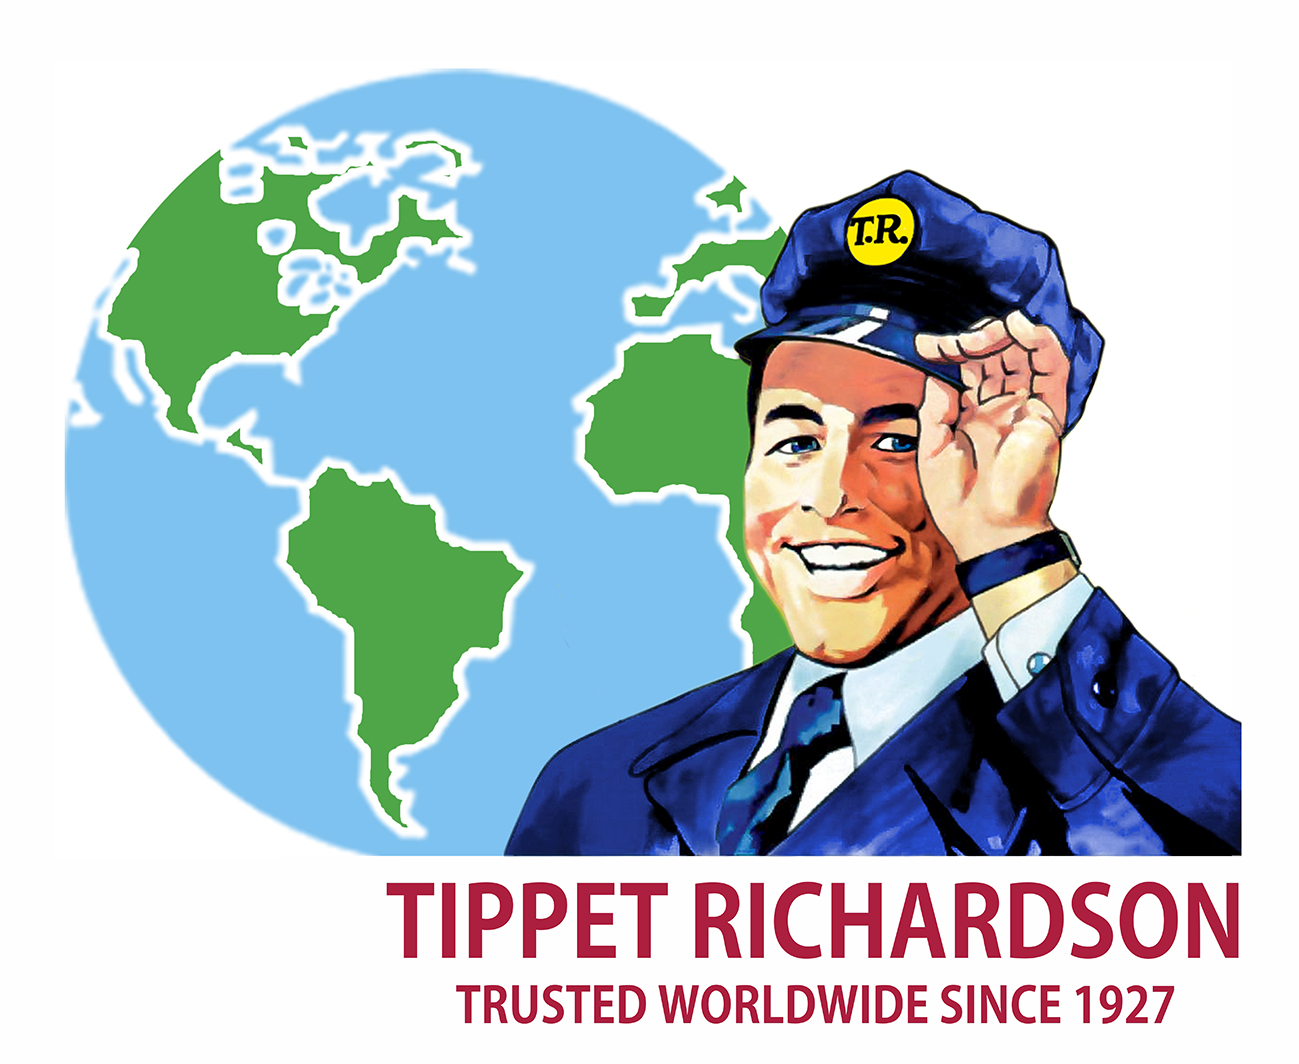 Tippet Richardson